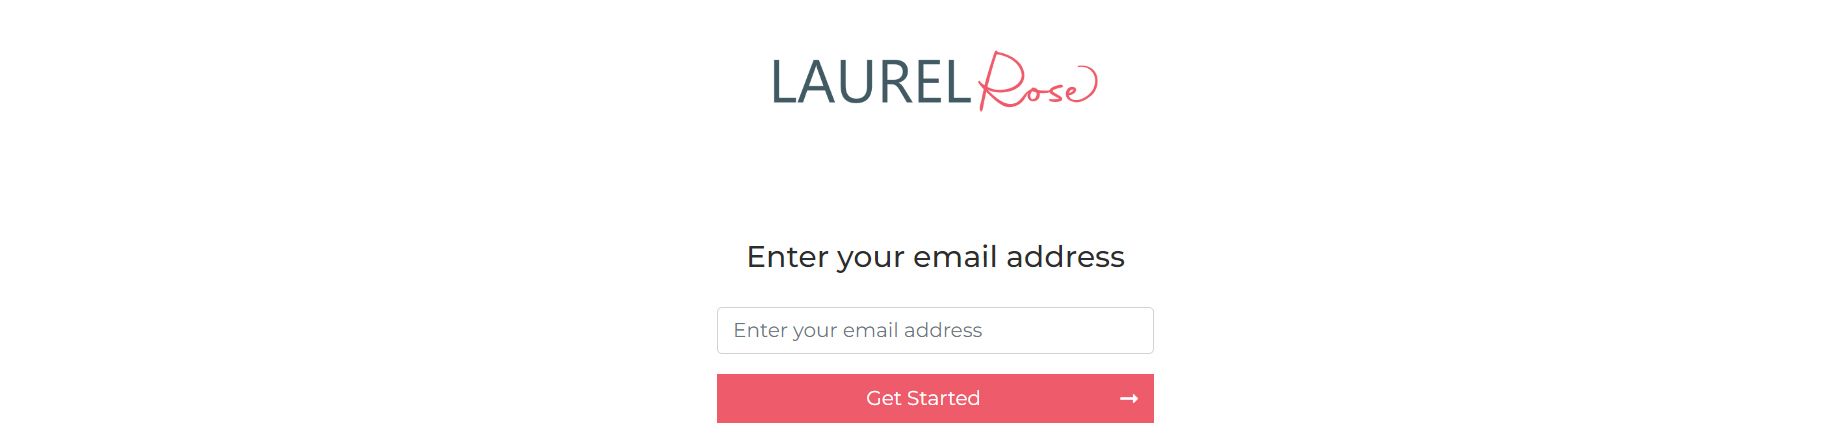 Laurel Rose Business Opportunity